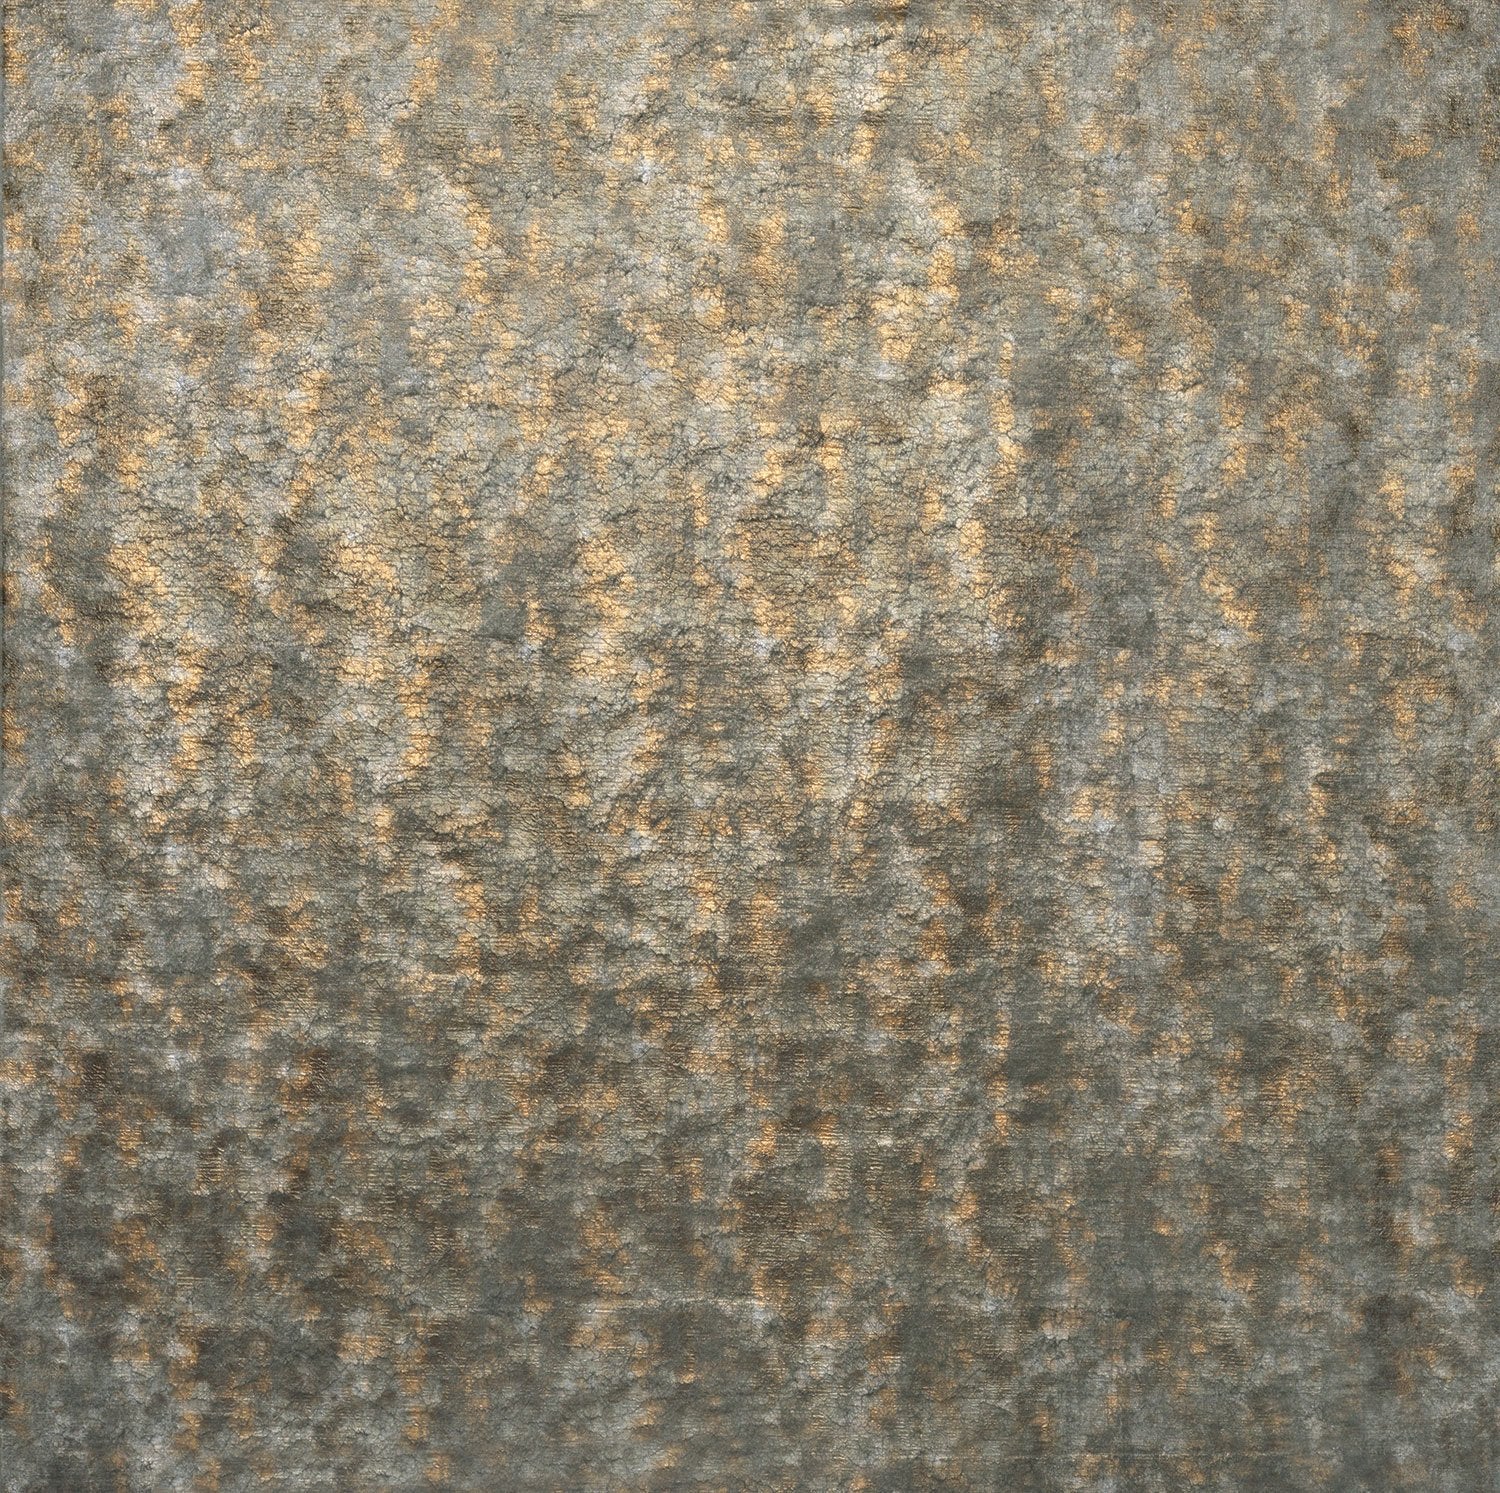 Nina Campbell Fabric - Gioconda Duccio Taupe/Gold/Gilver NCF4253-02